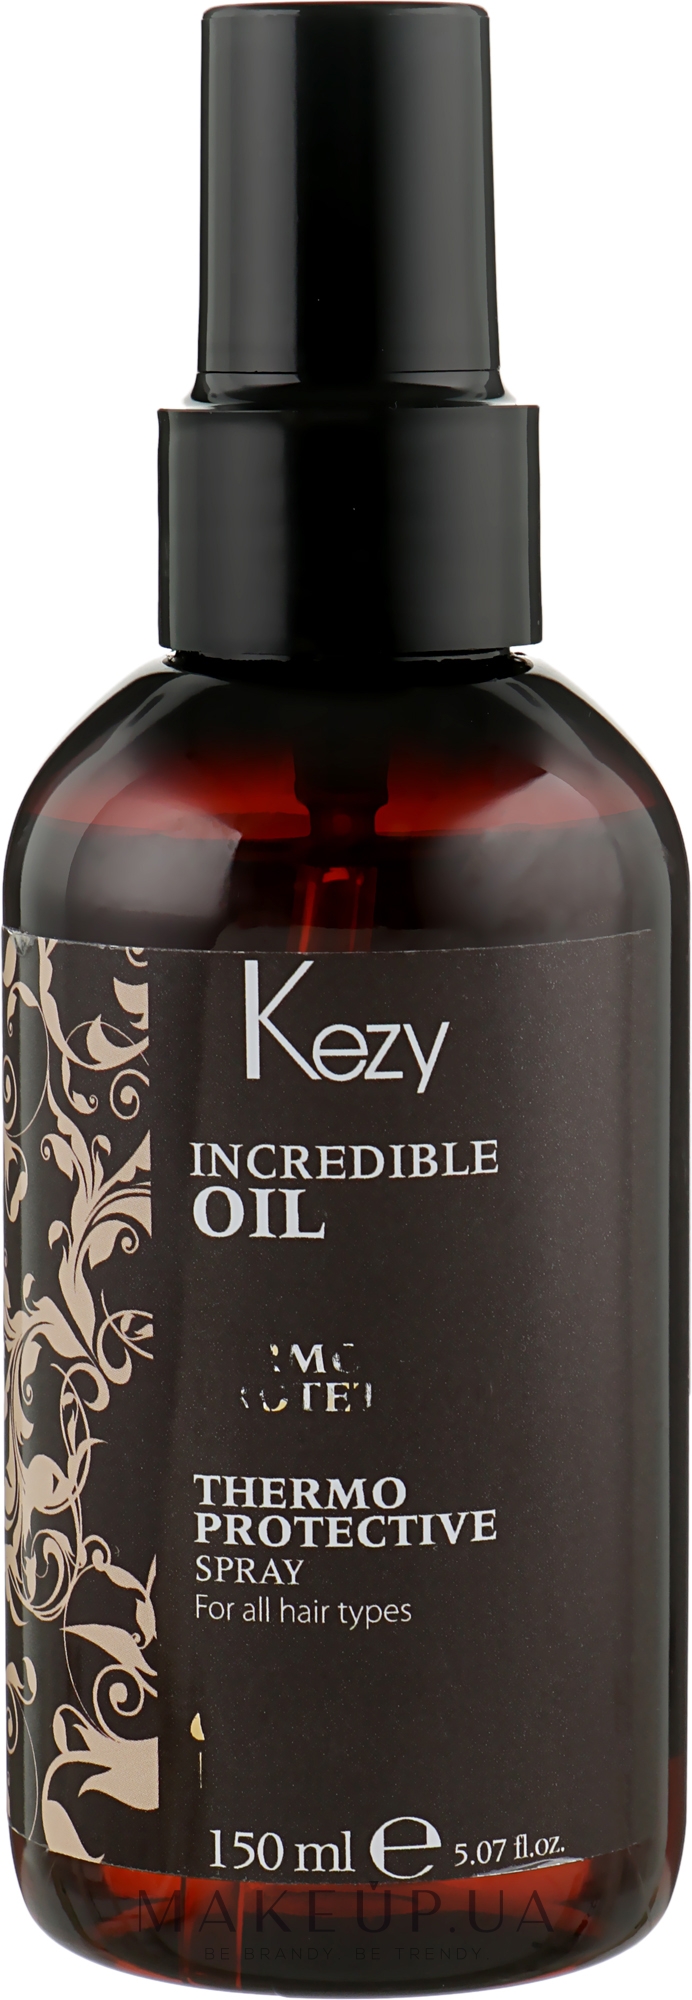 Спрей термозащитный для волос - Kezy Incredible Oil Thermoprotective Spray — фото 150ml